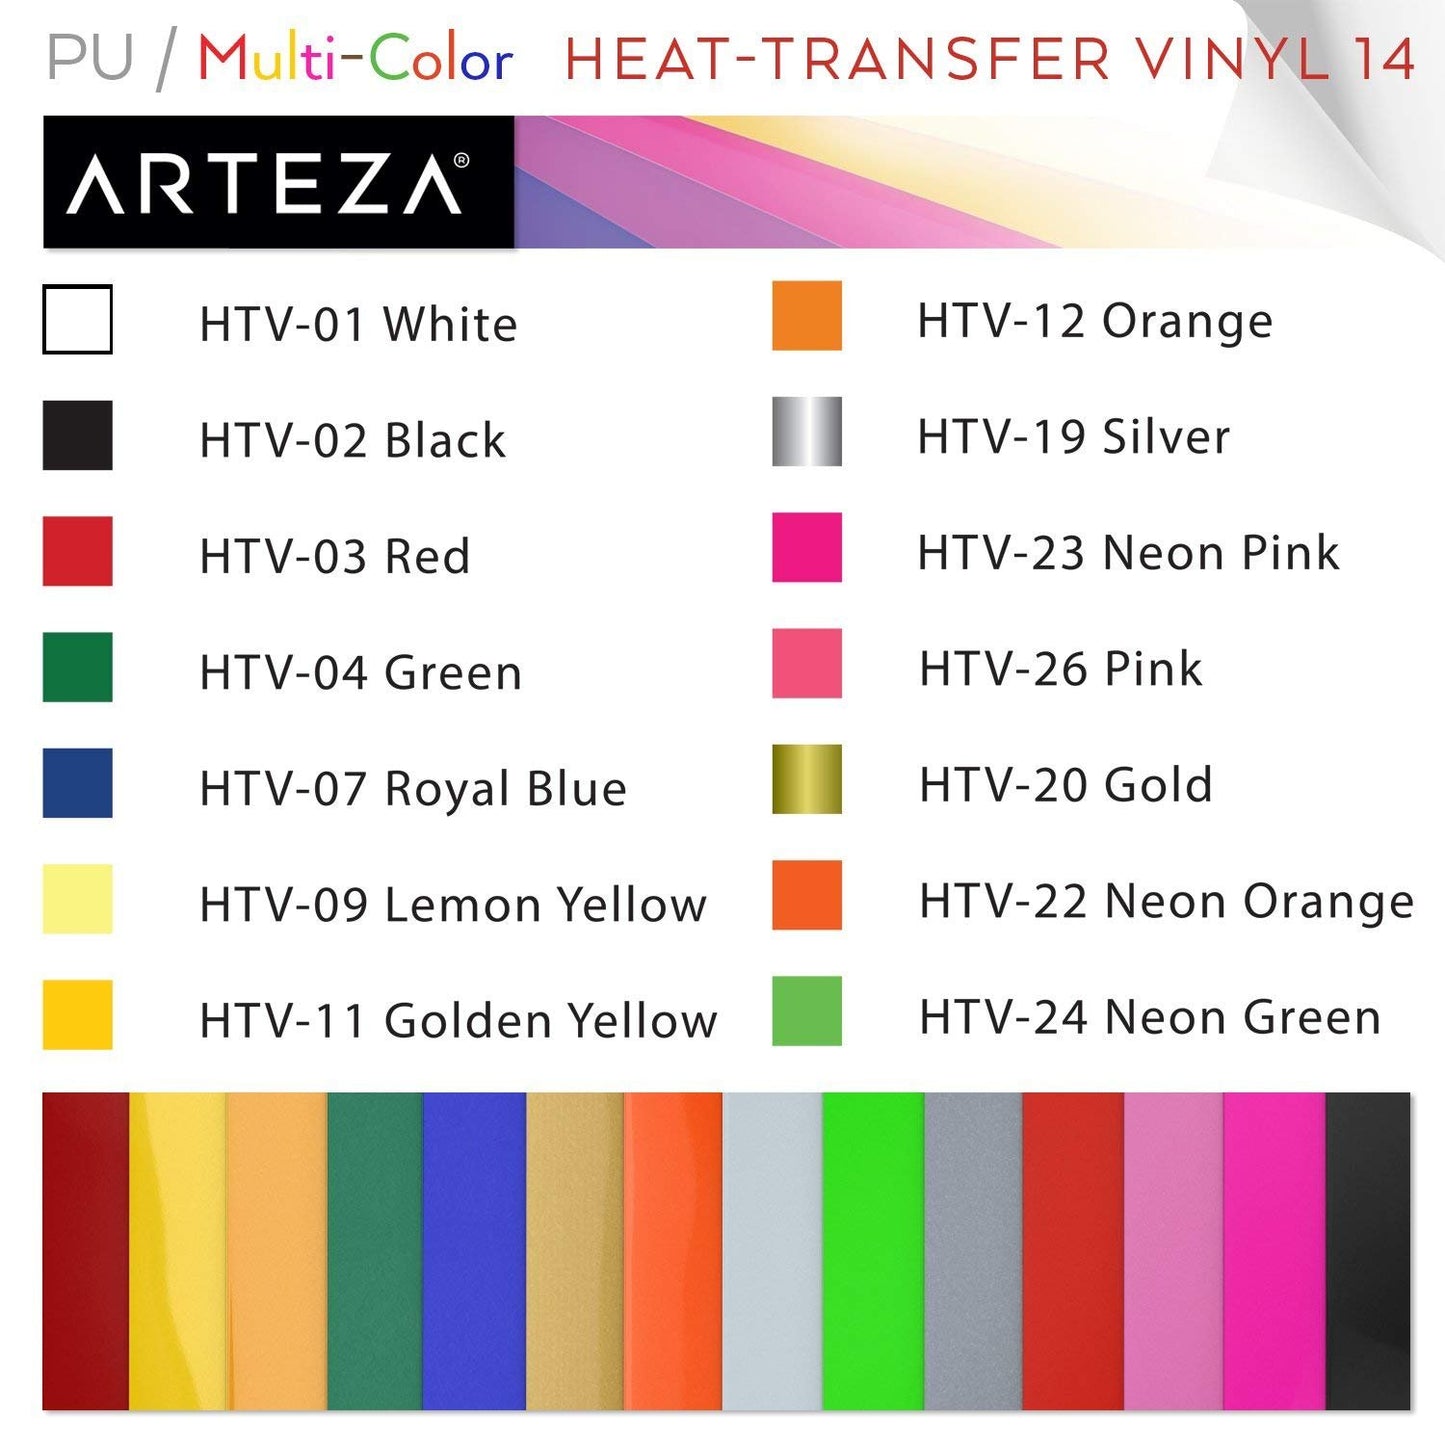 Arteza Heat Transfer Vinyl, Assorted Colors, 10" x 12” Sheets - Pack of 14